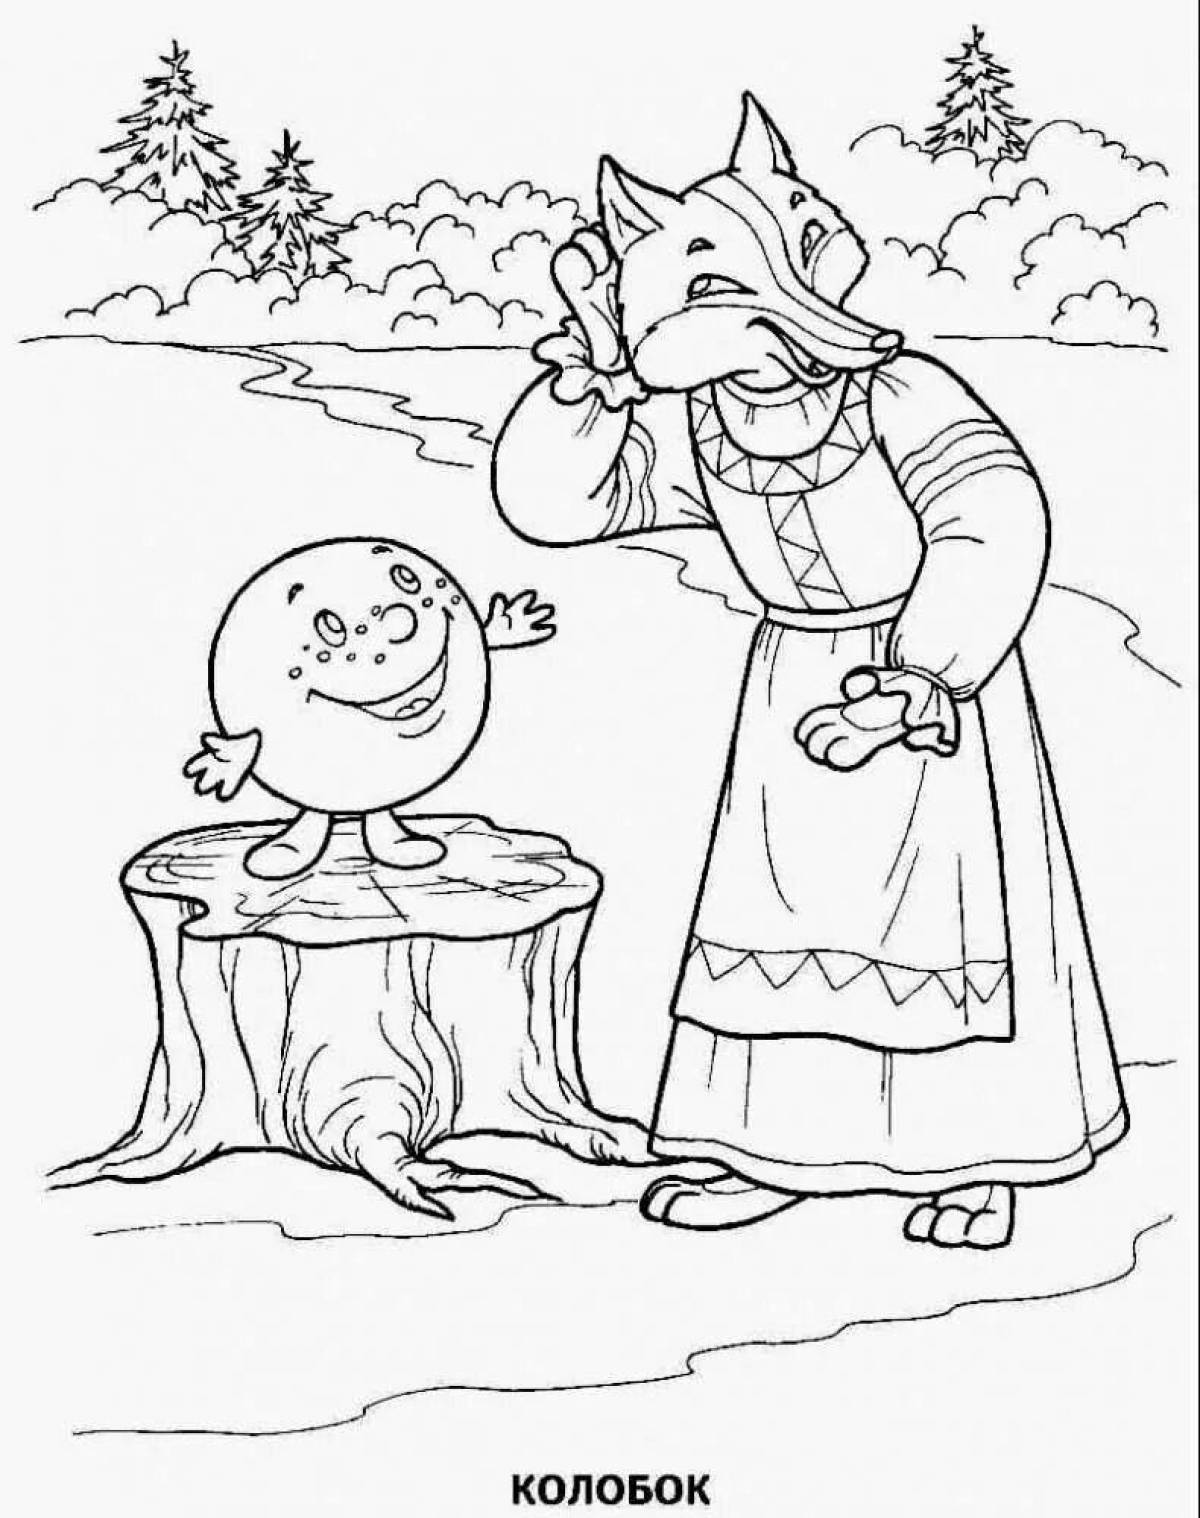 A fun coloring book for Russian folk tales for preschoolers